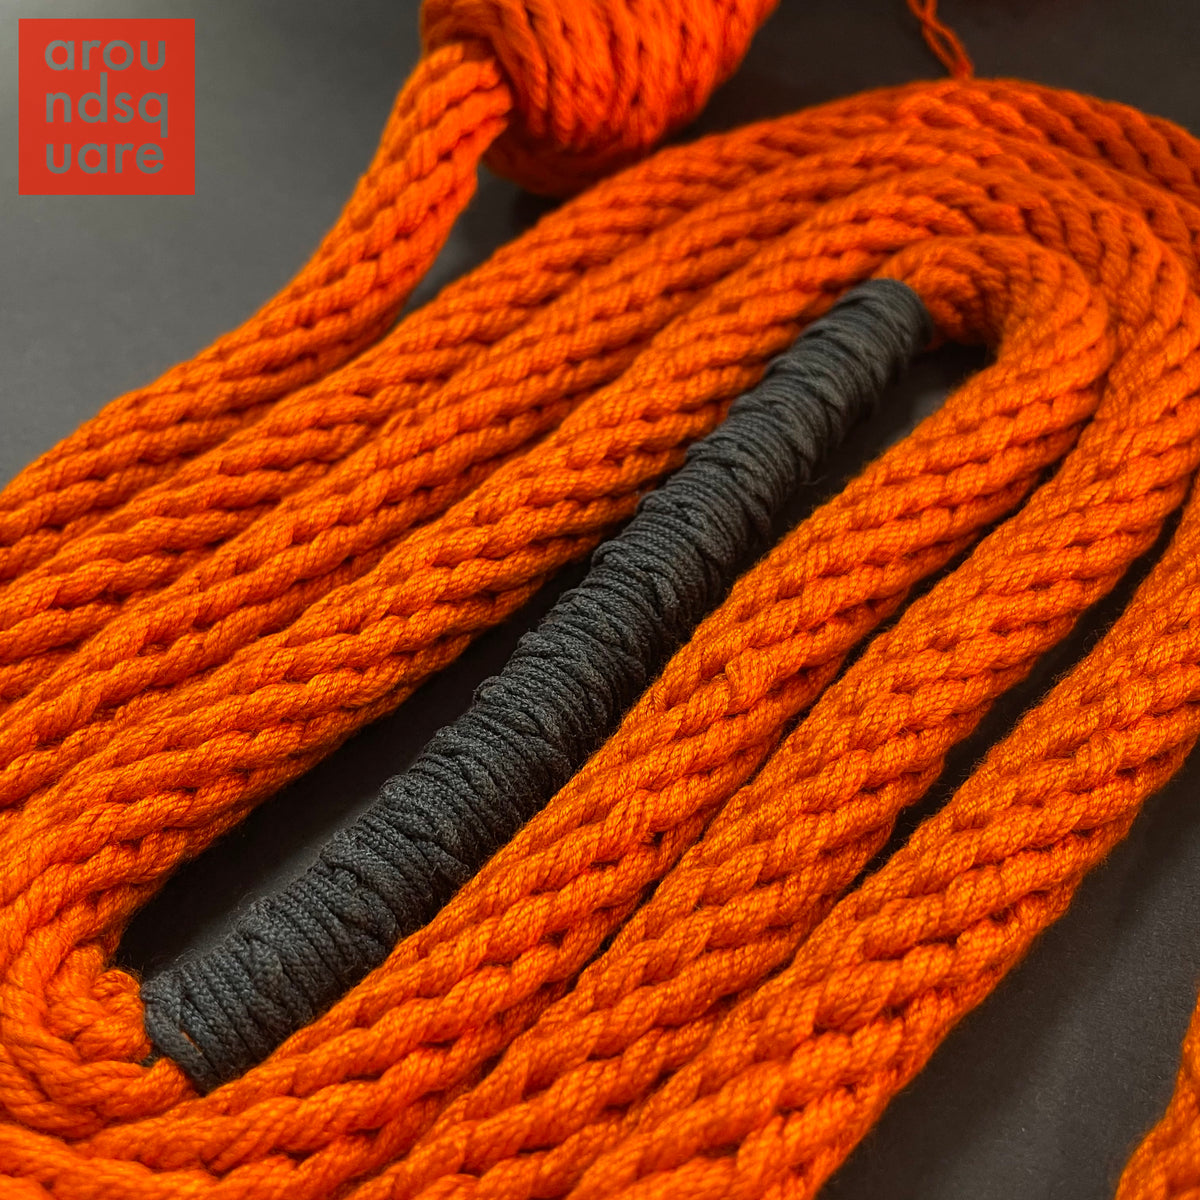 Hybrid Rope – aroundsquare